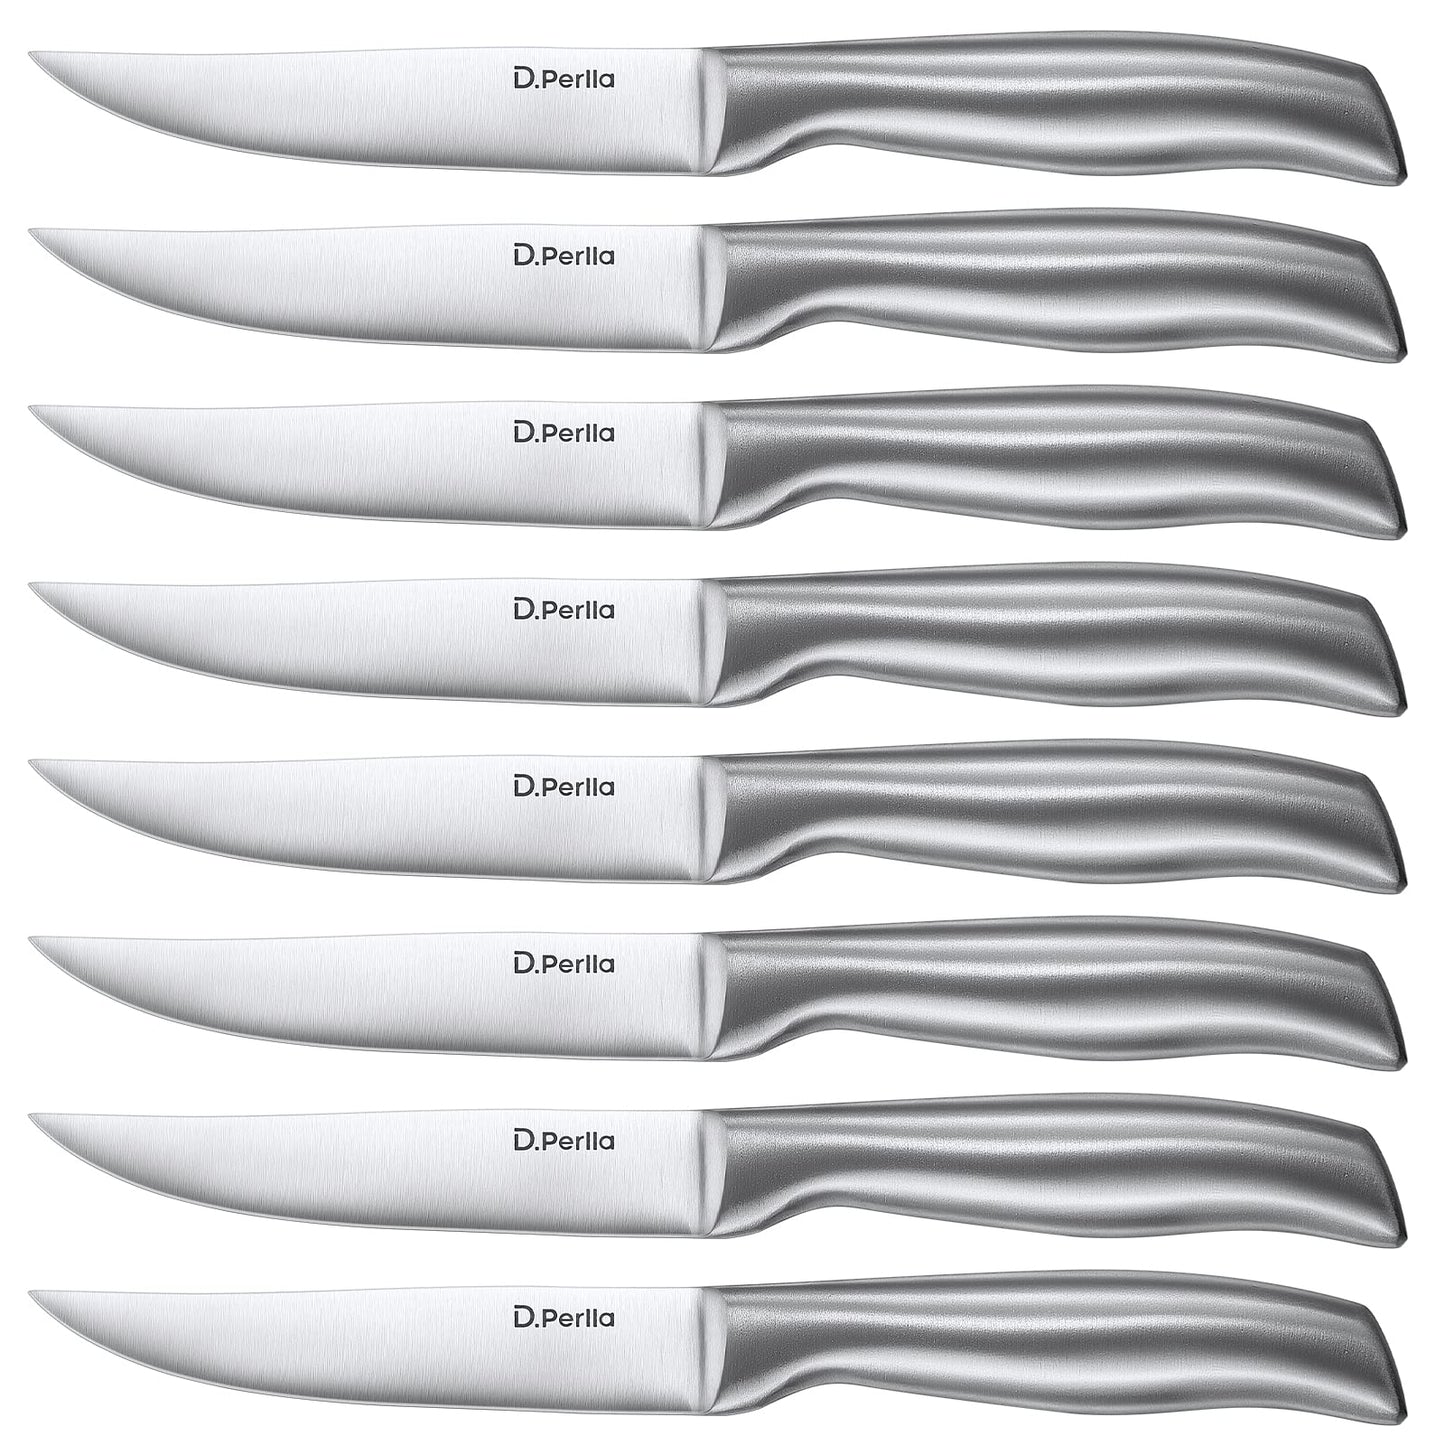 D.Perlla Steak Knives, Non Serrated Stainless Steel Sharp Steak Knife Set of 8 with Gift Box